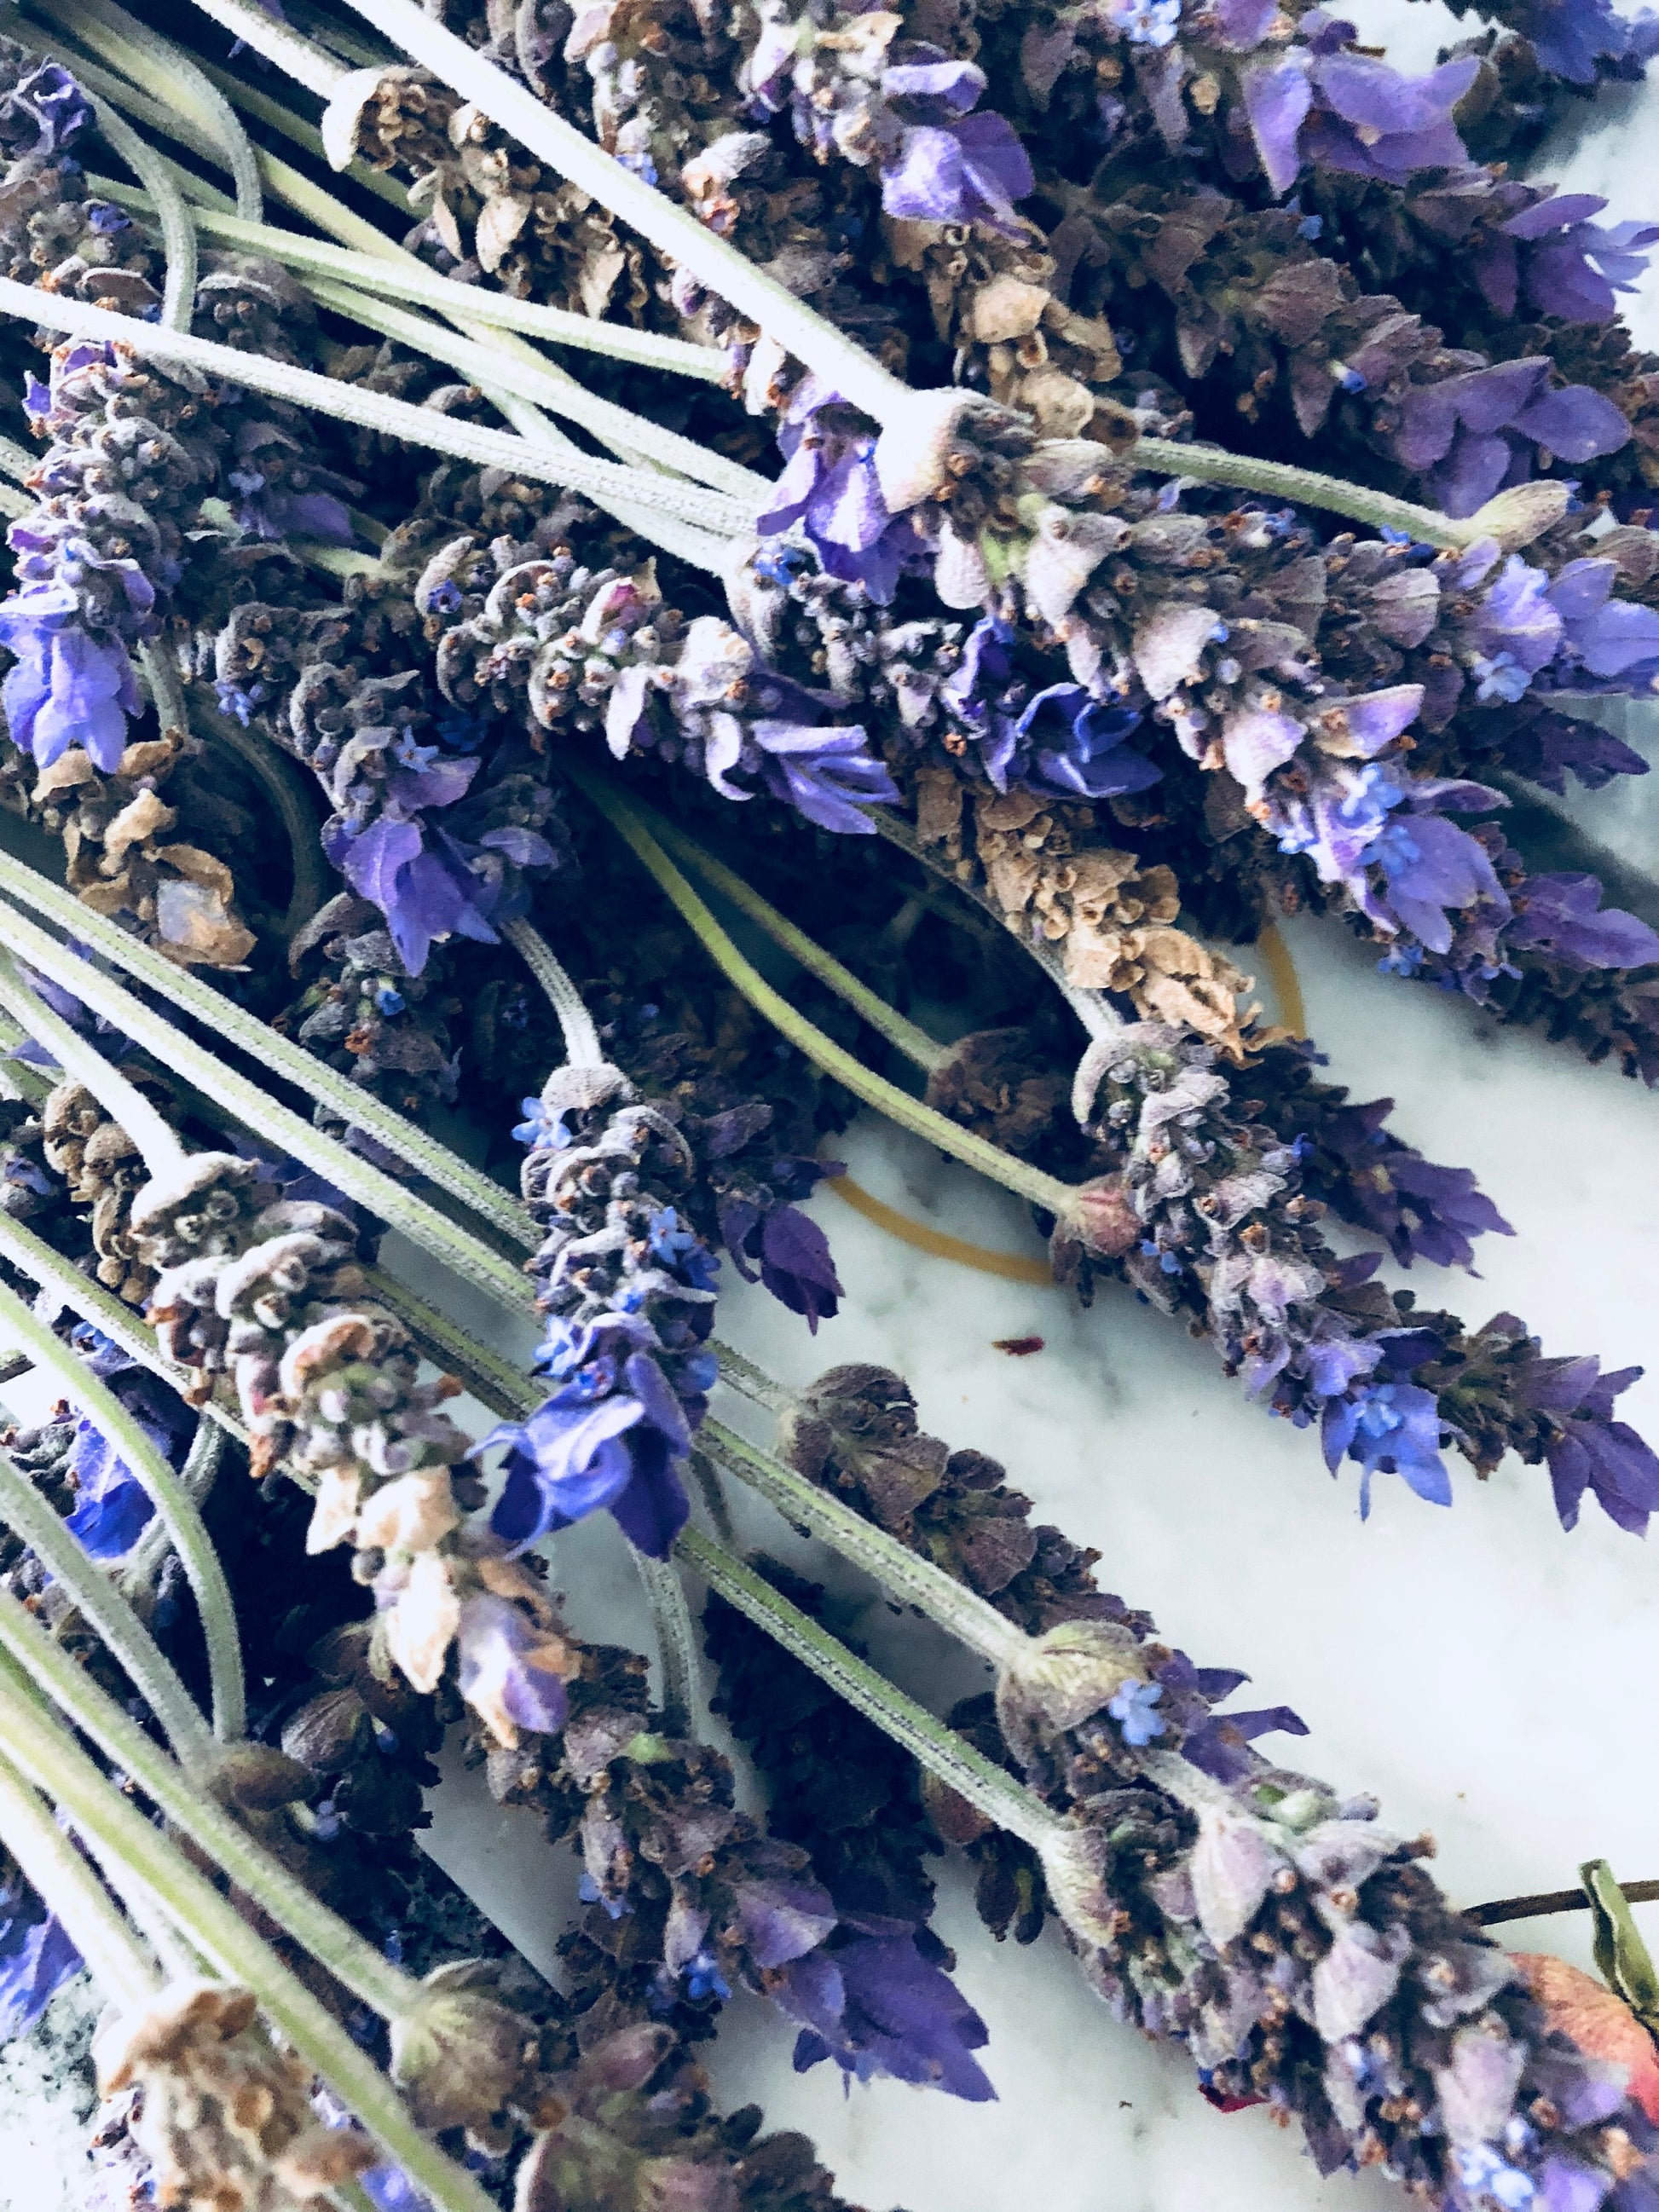 Botanical Herbs, Bulk Herbs, Loose Herbs, Assorted Herbs, Magical Herbs, Dried Flowers, Tea Herbs, Just the Basics Herbs, Mix and Match